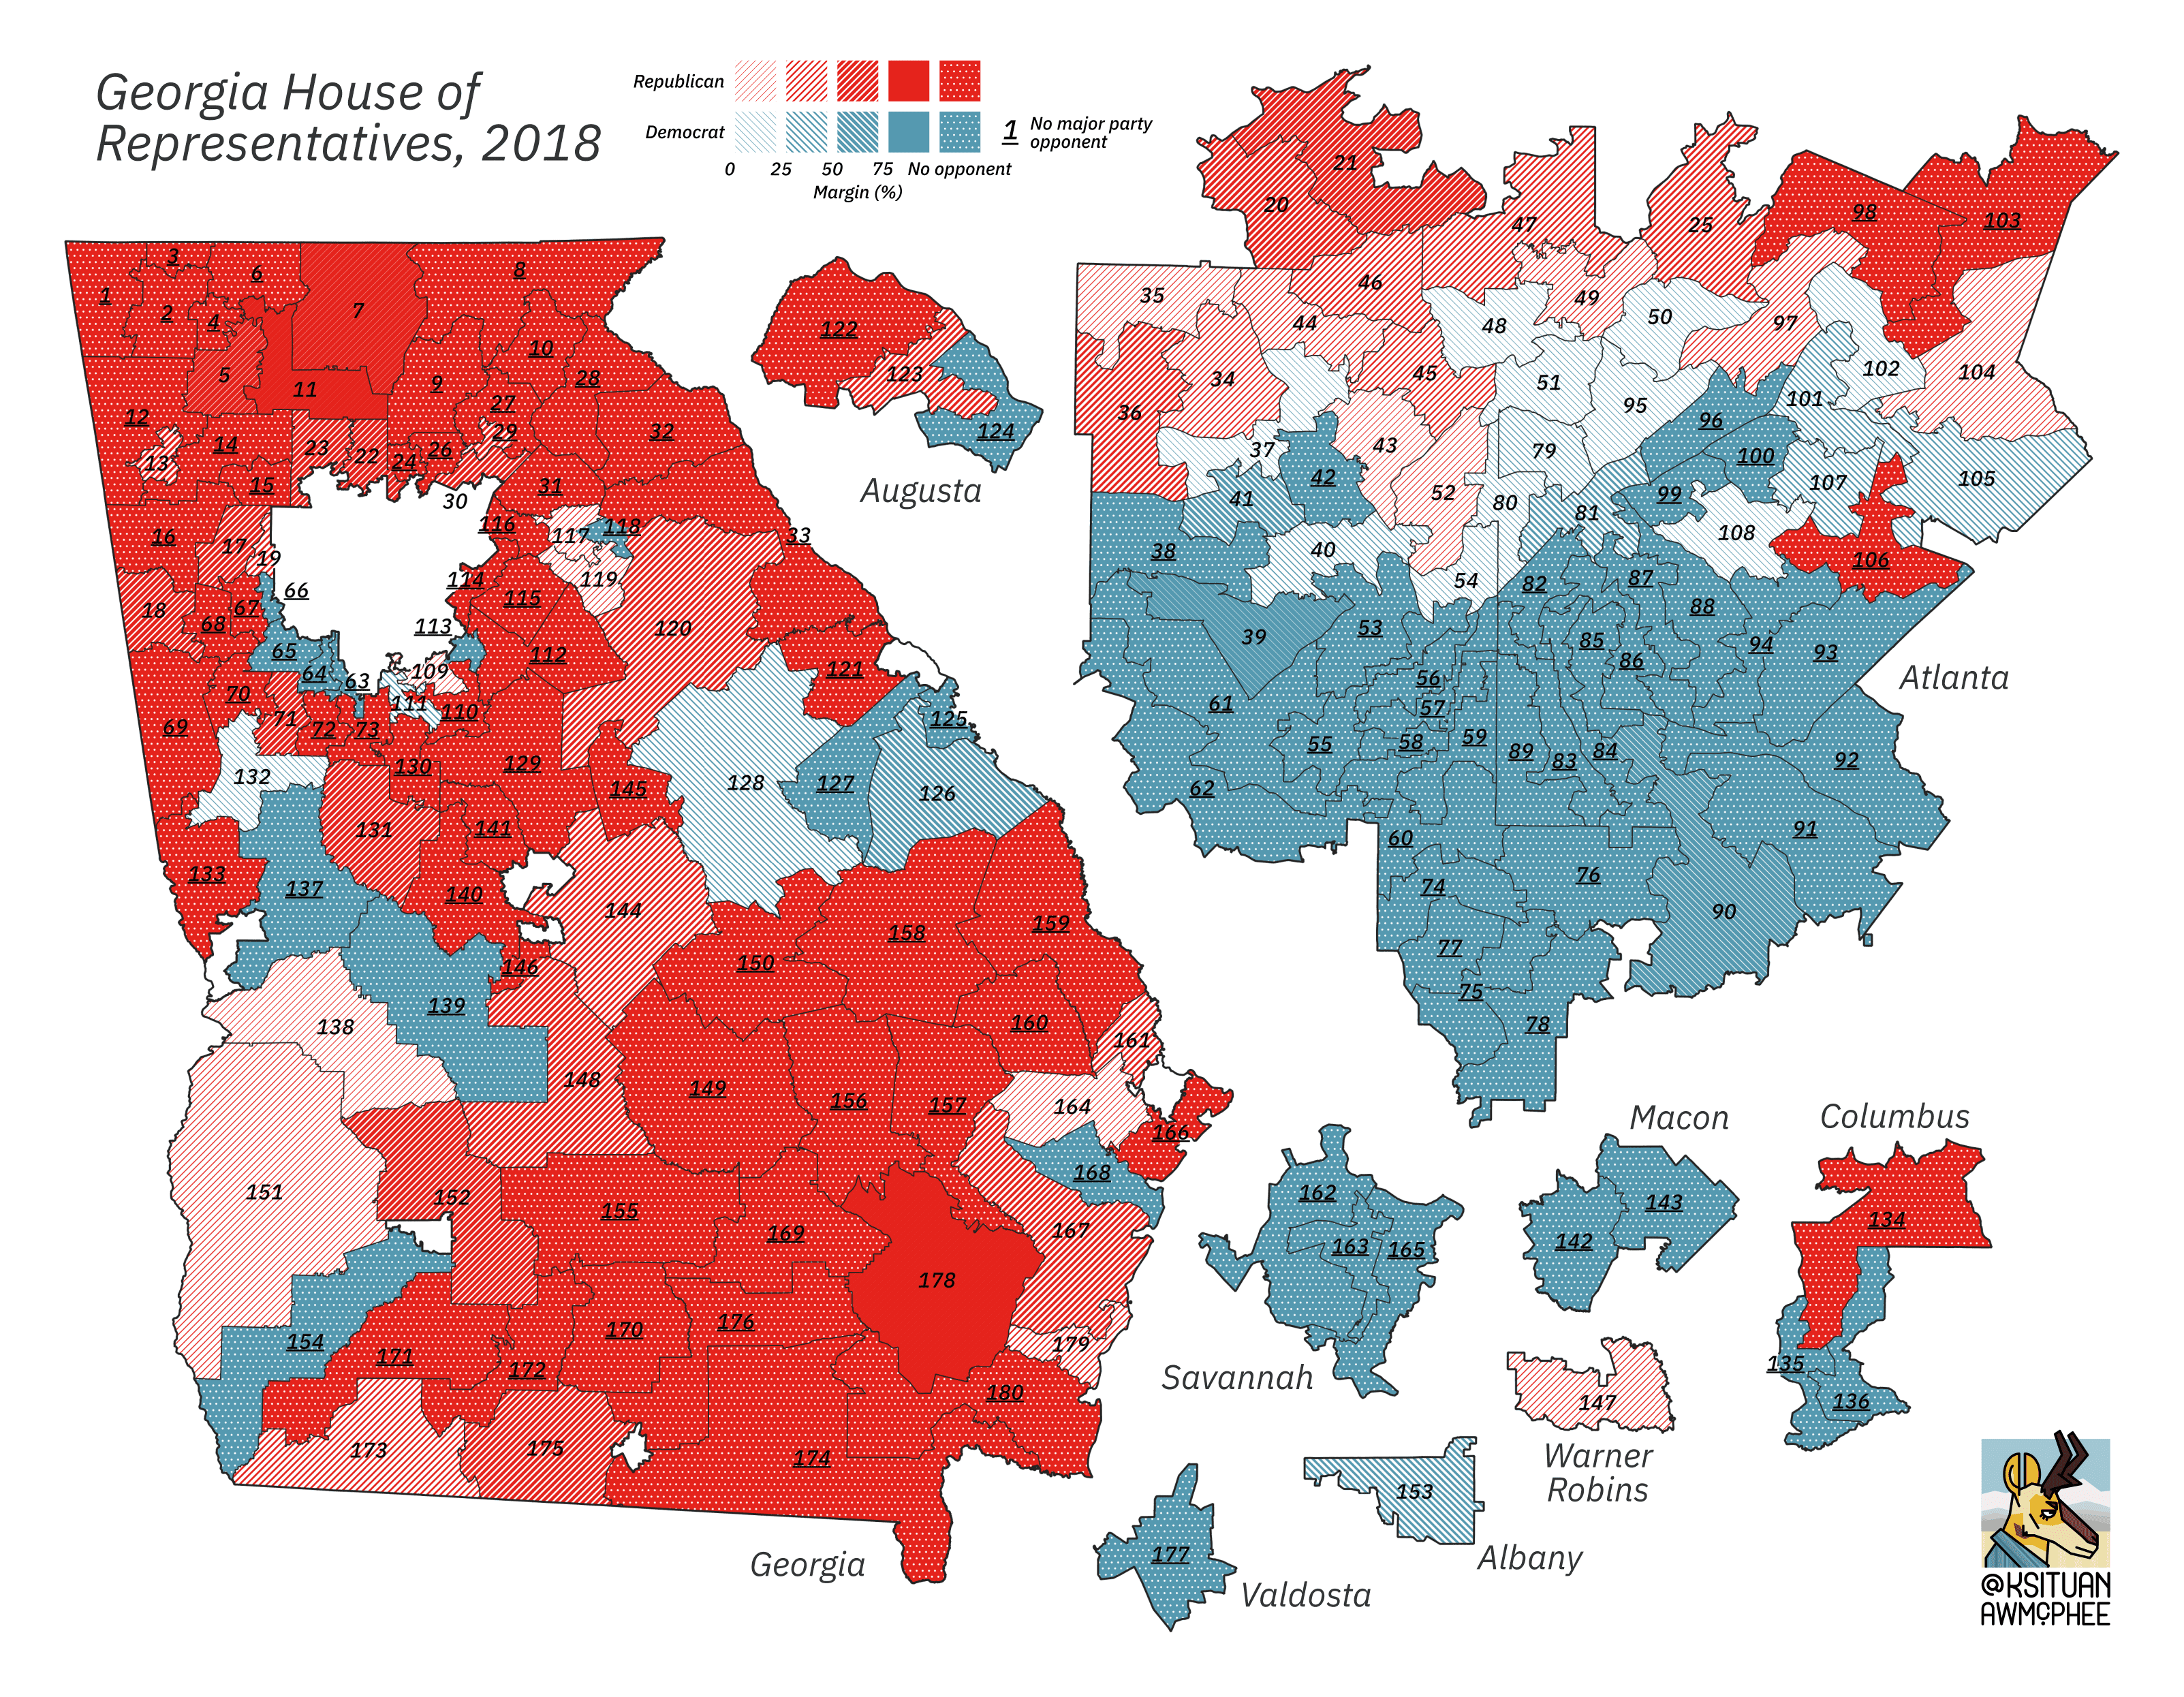 A political map of Georgia.